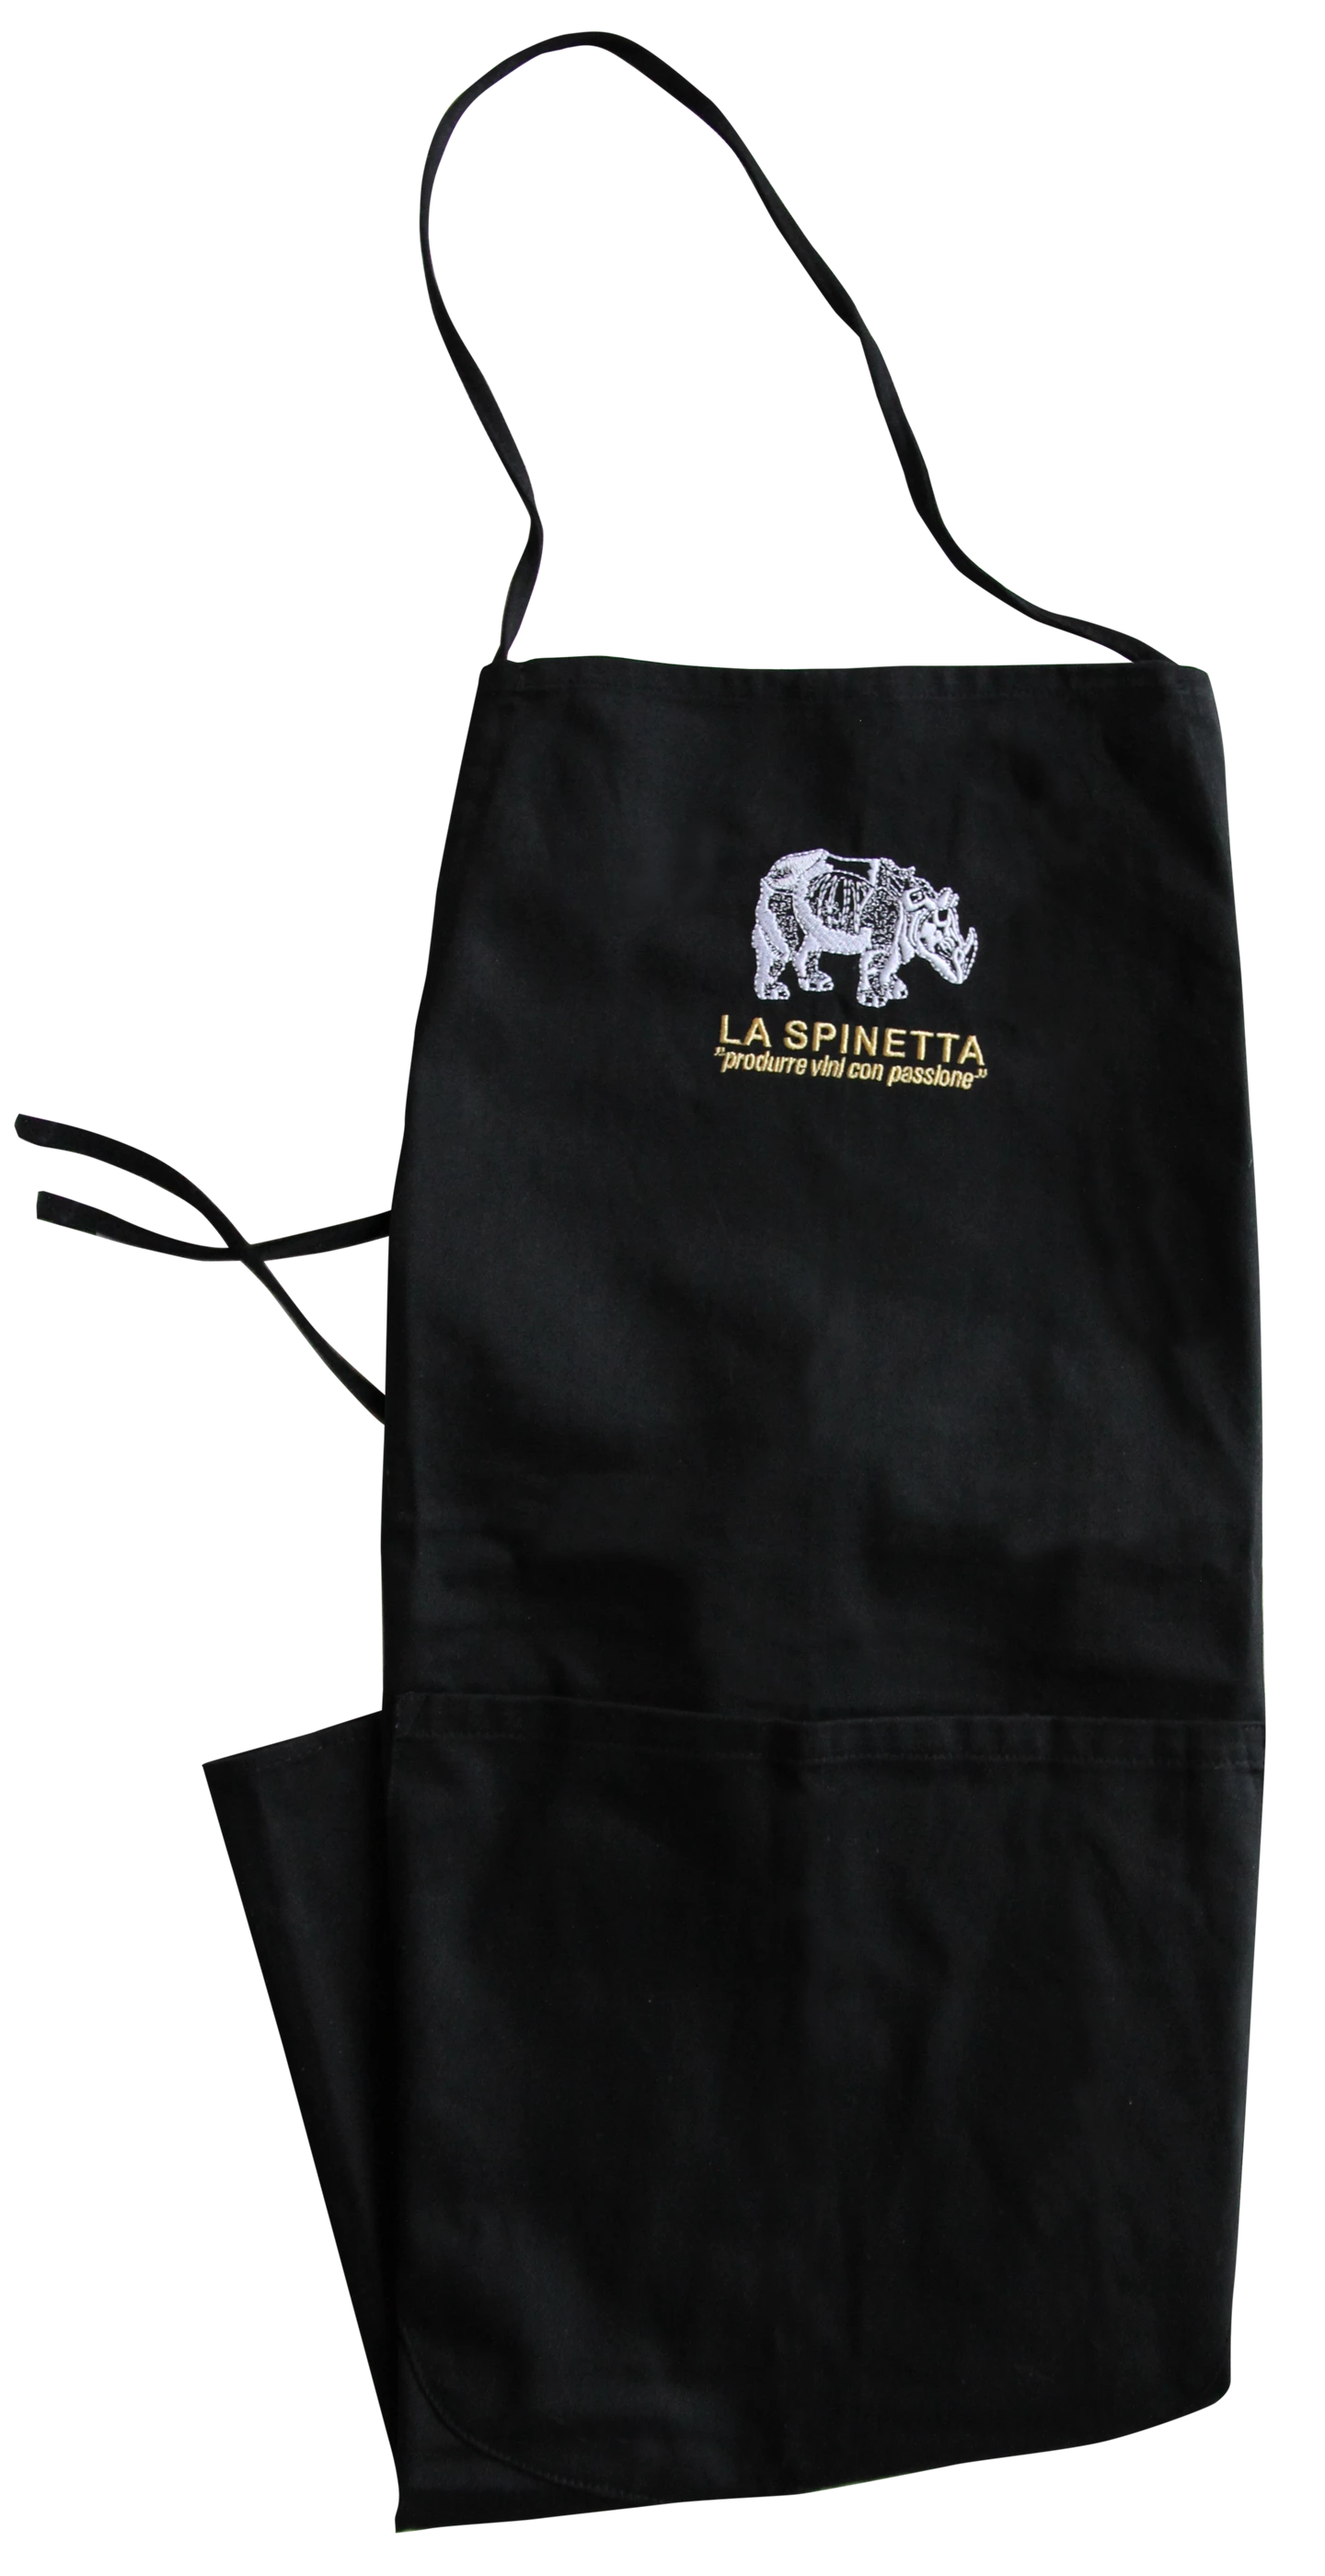 Løgismose Merchandise La spinetta forklæde